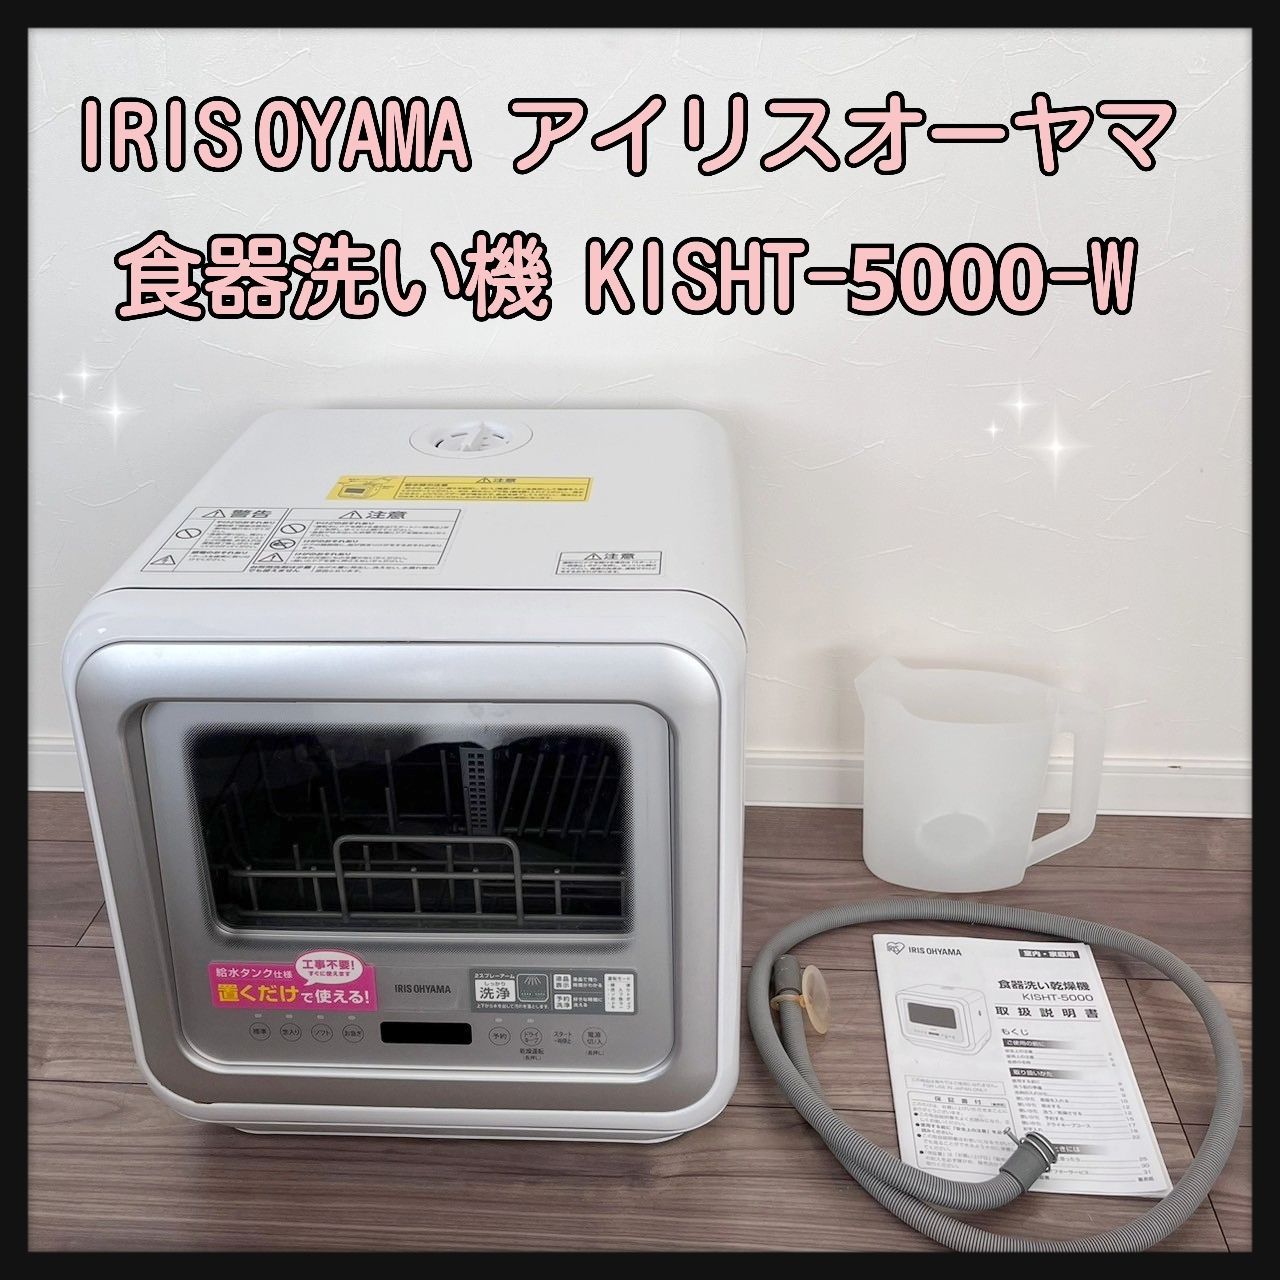 IRIS OYAMA アイリスオーヤマ 食器洗い機 KISHT-5000-W 2020年製